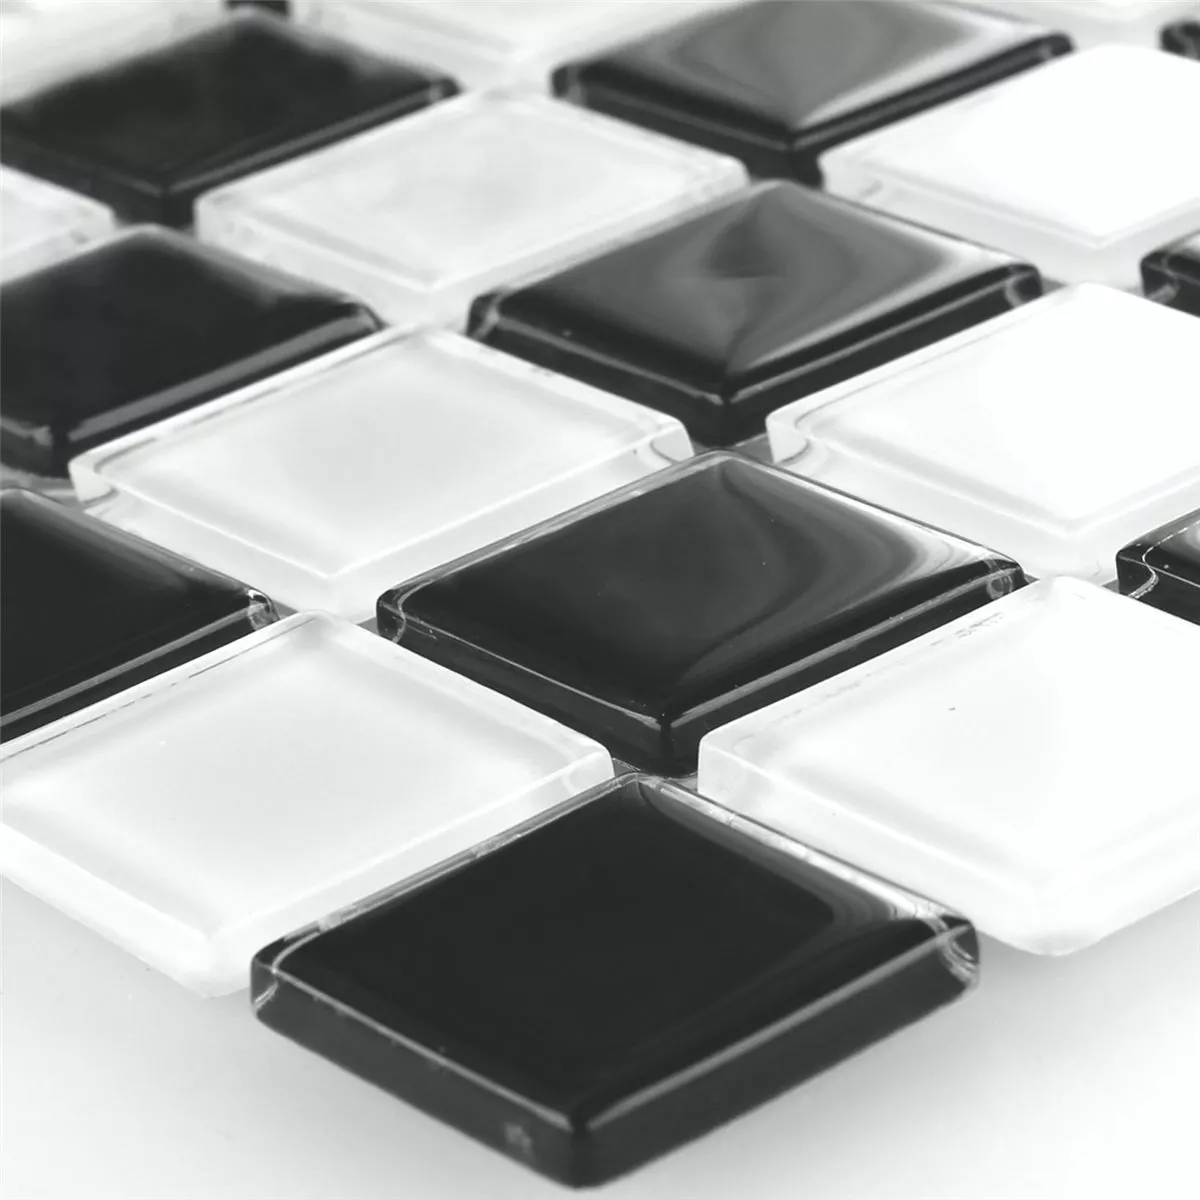 Sample Mosaic Tiles Glass Chess Board Black White